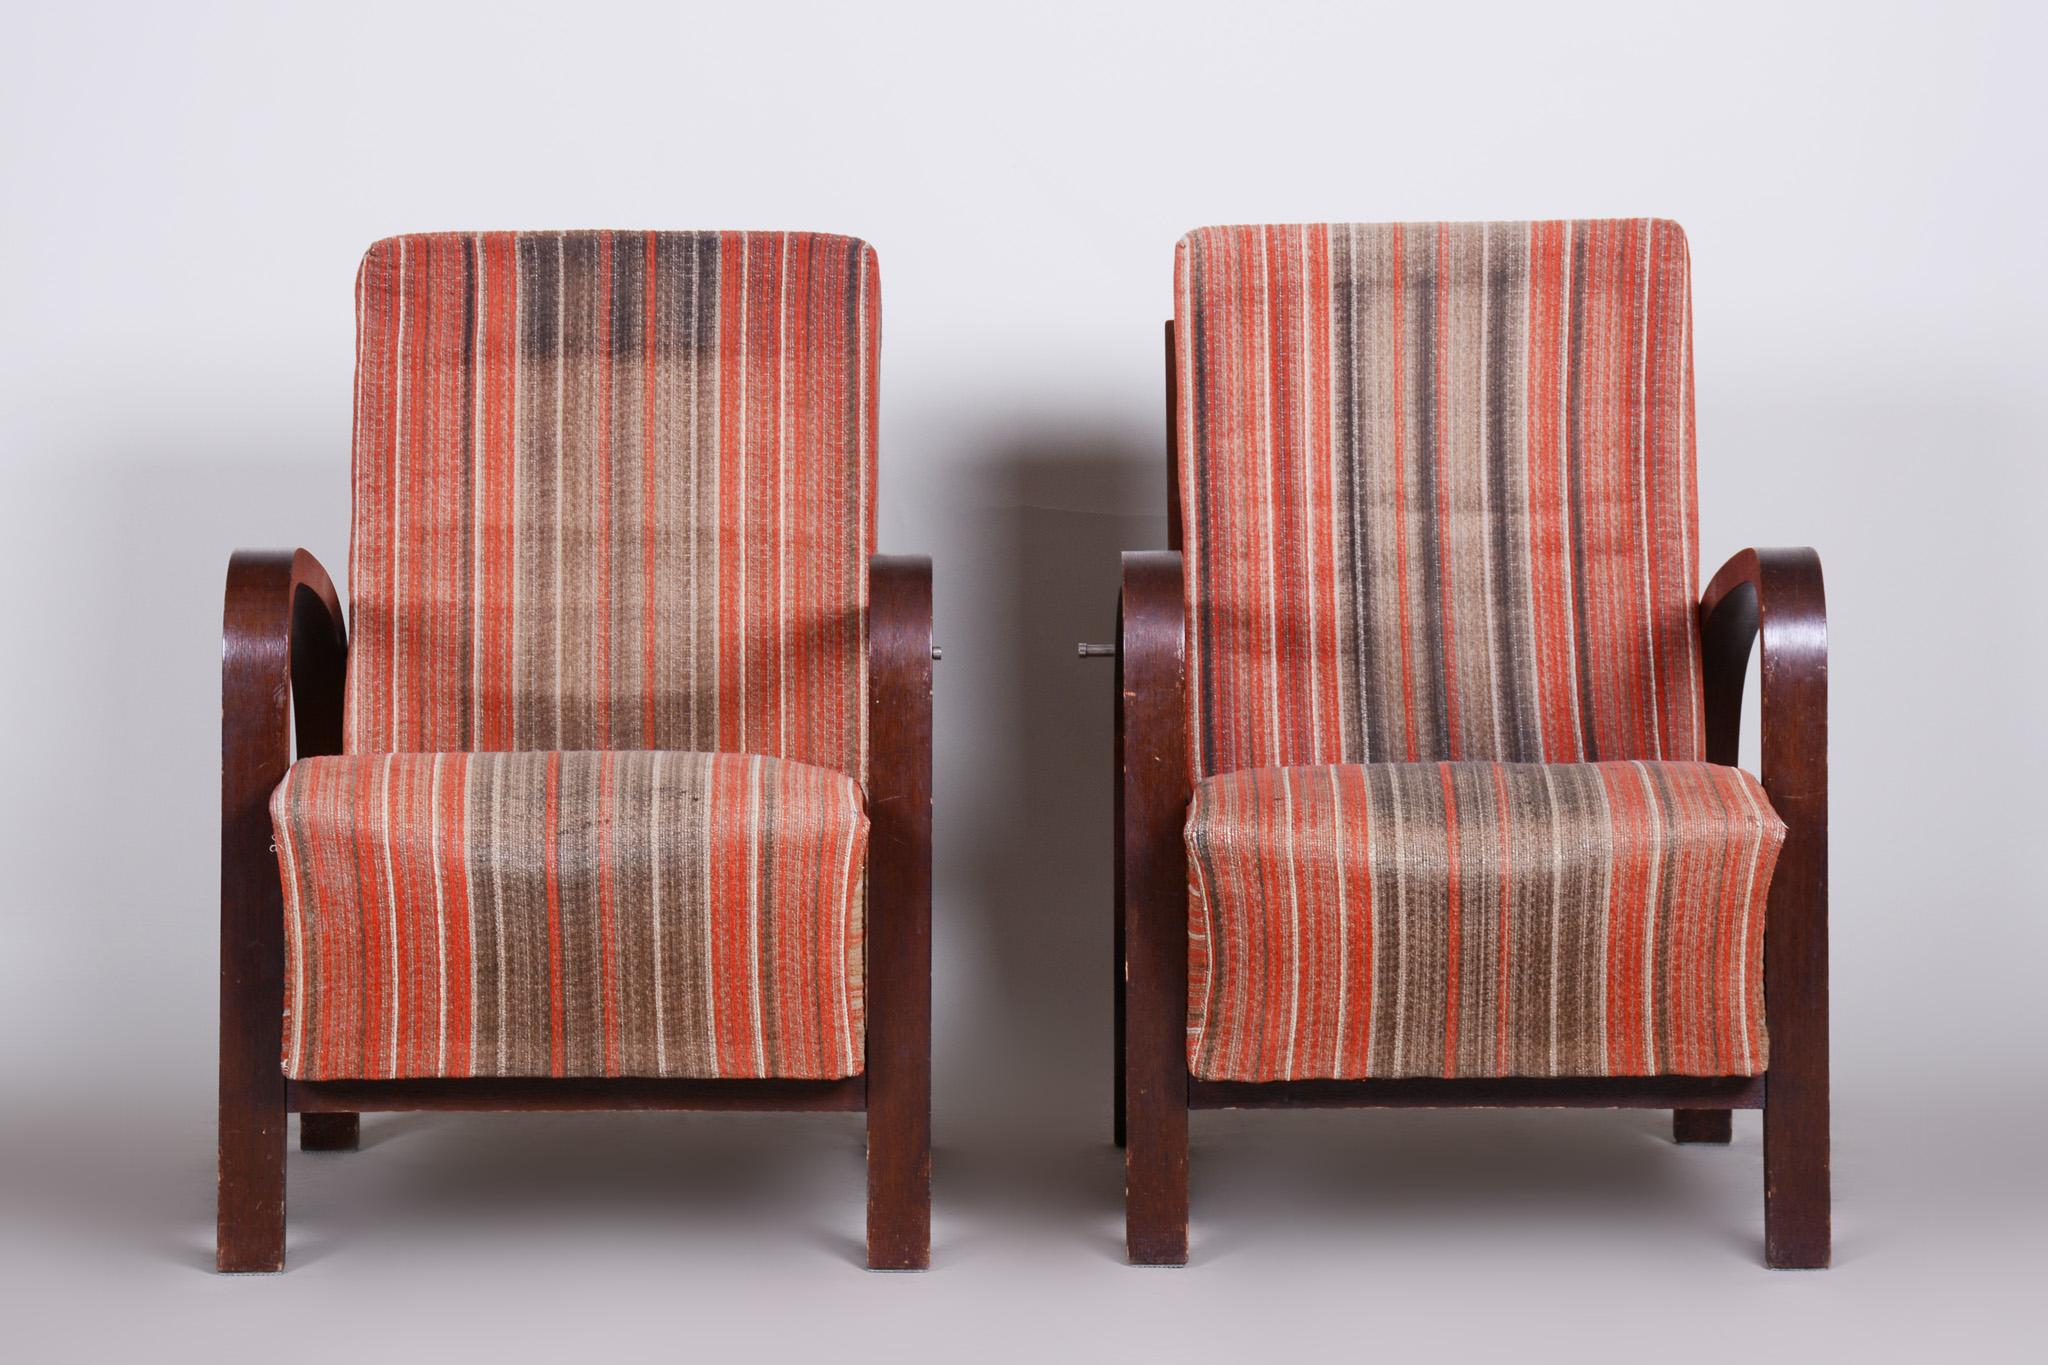 Pair of Art Deco armchairs
Source: Czechia (Czech republic)
Period: 1930-1939.
Material: Oak
Original well preserved condition.